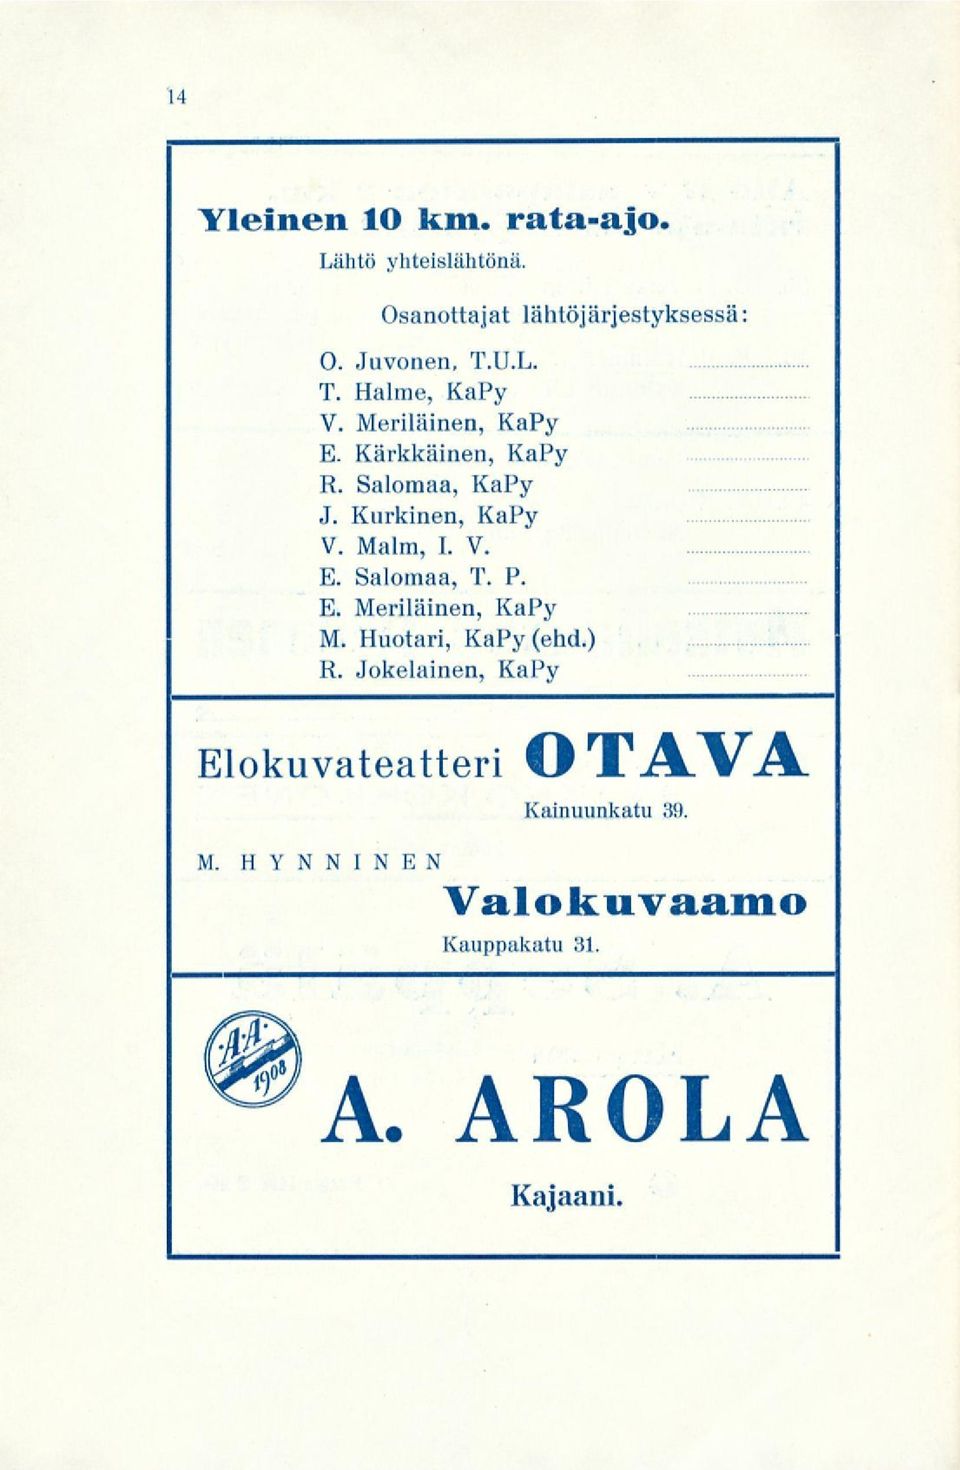 Kurkinen, KaPy V. Malm, I. V. E. Salomaa, T. P. E. Meriläinen, KaPy M. Huotari, KaPy (ehd.) R.